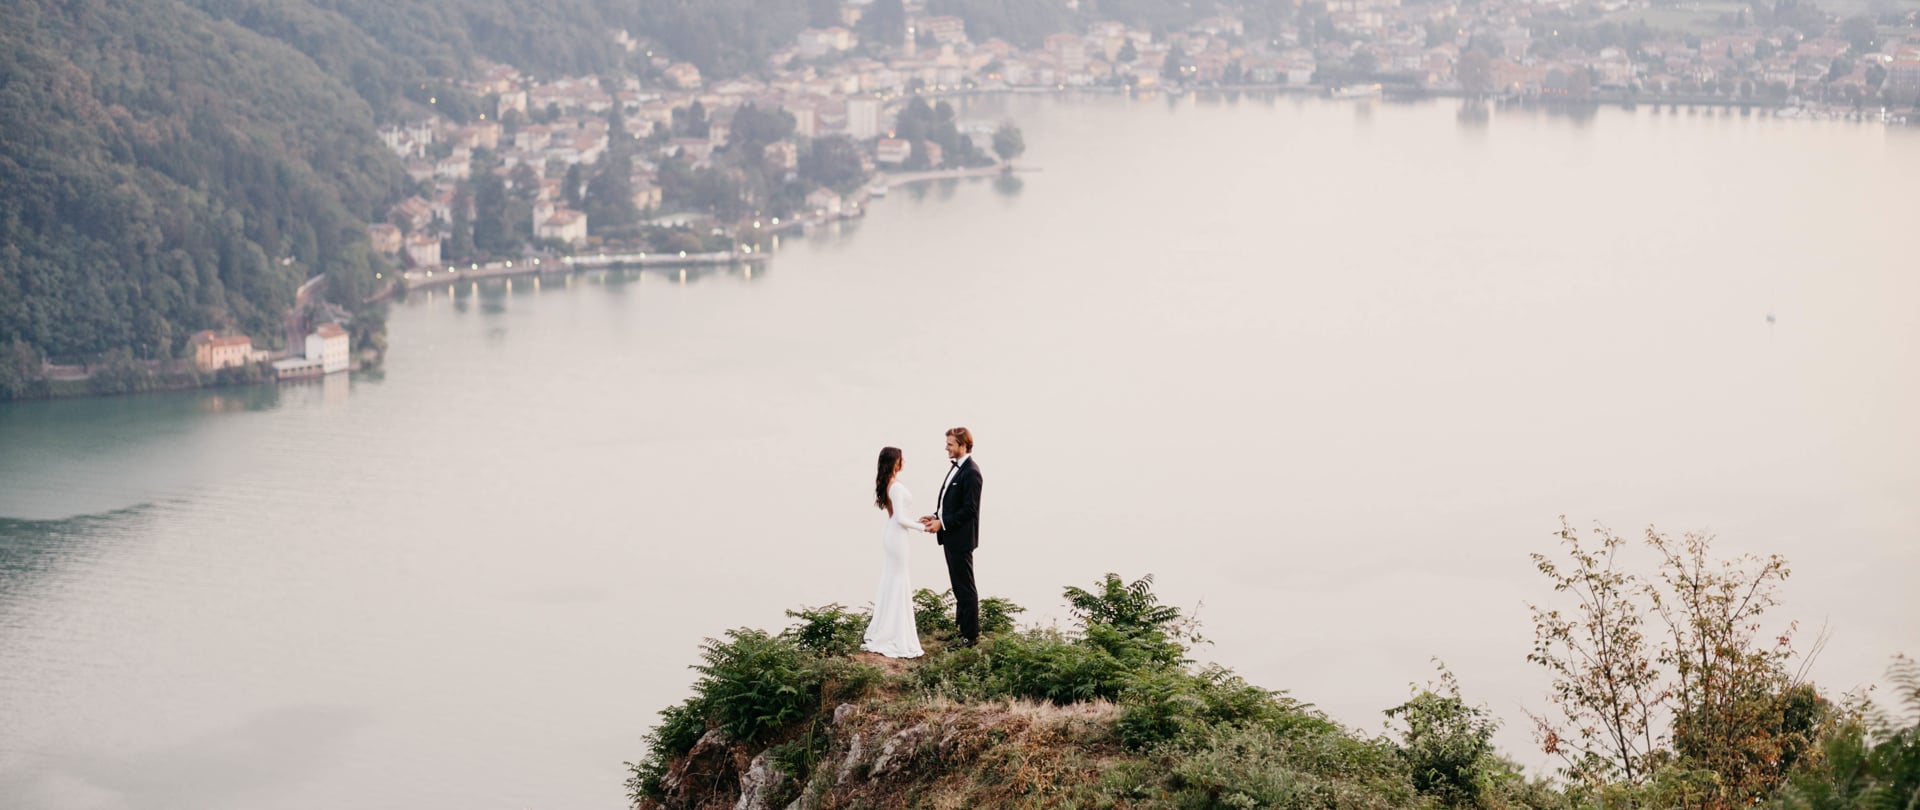 Caro & Patrick Wedding Video Filmed at Lugano, Switzerland